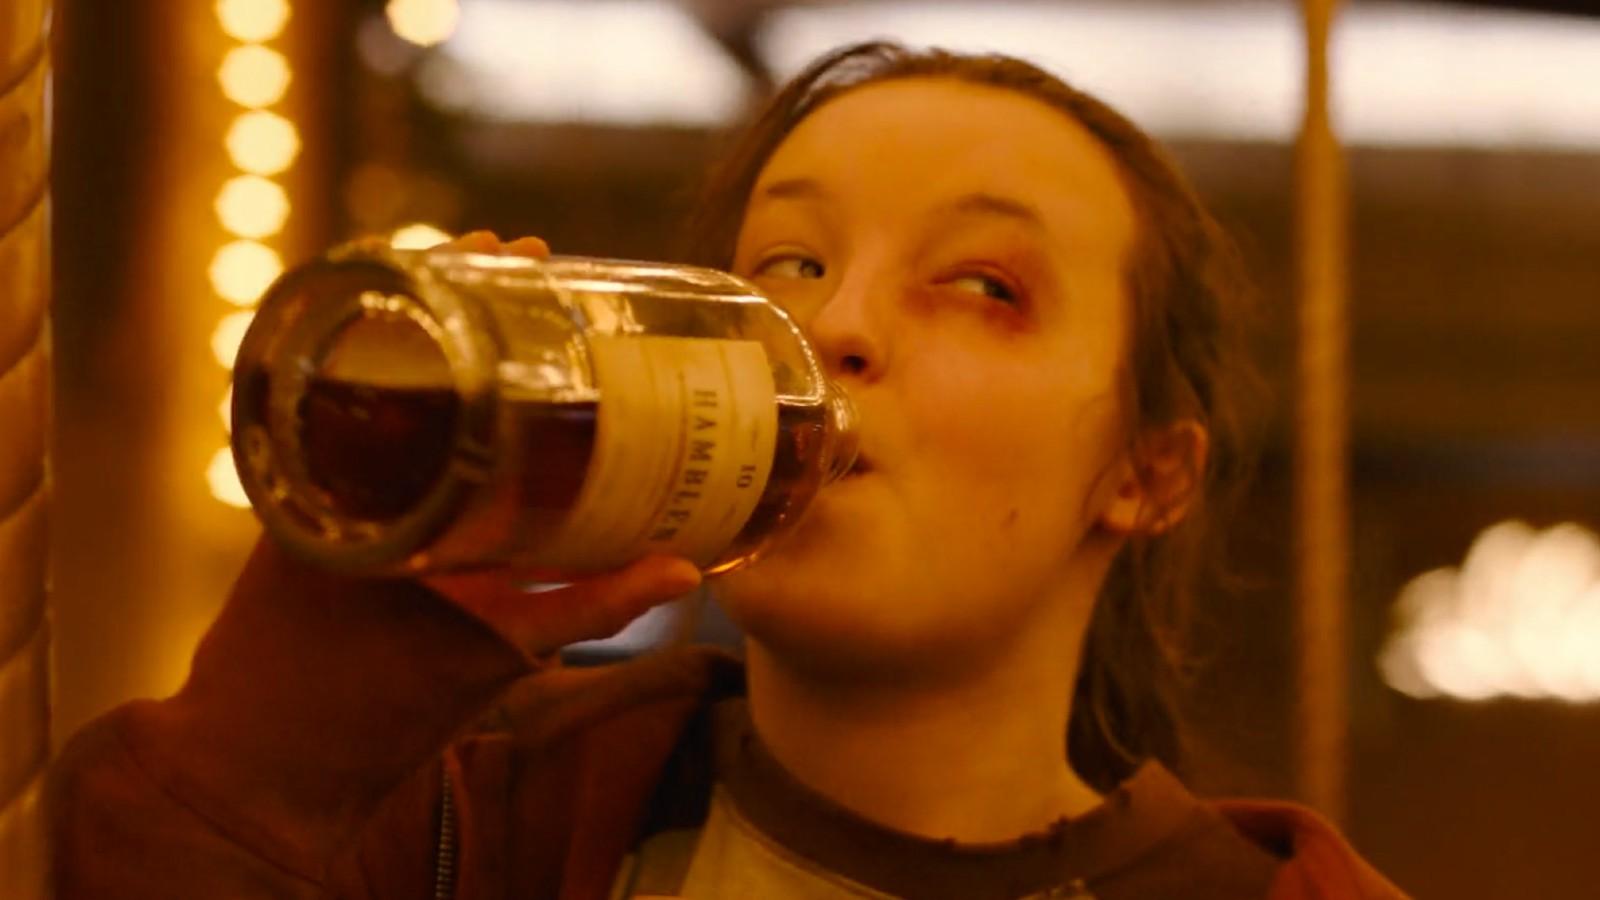 Ellie drinking Hamblen whisky in The Last of Us Episode 7